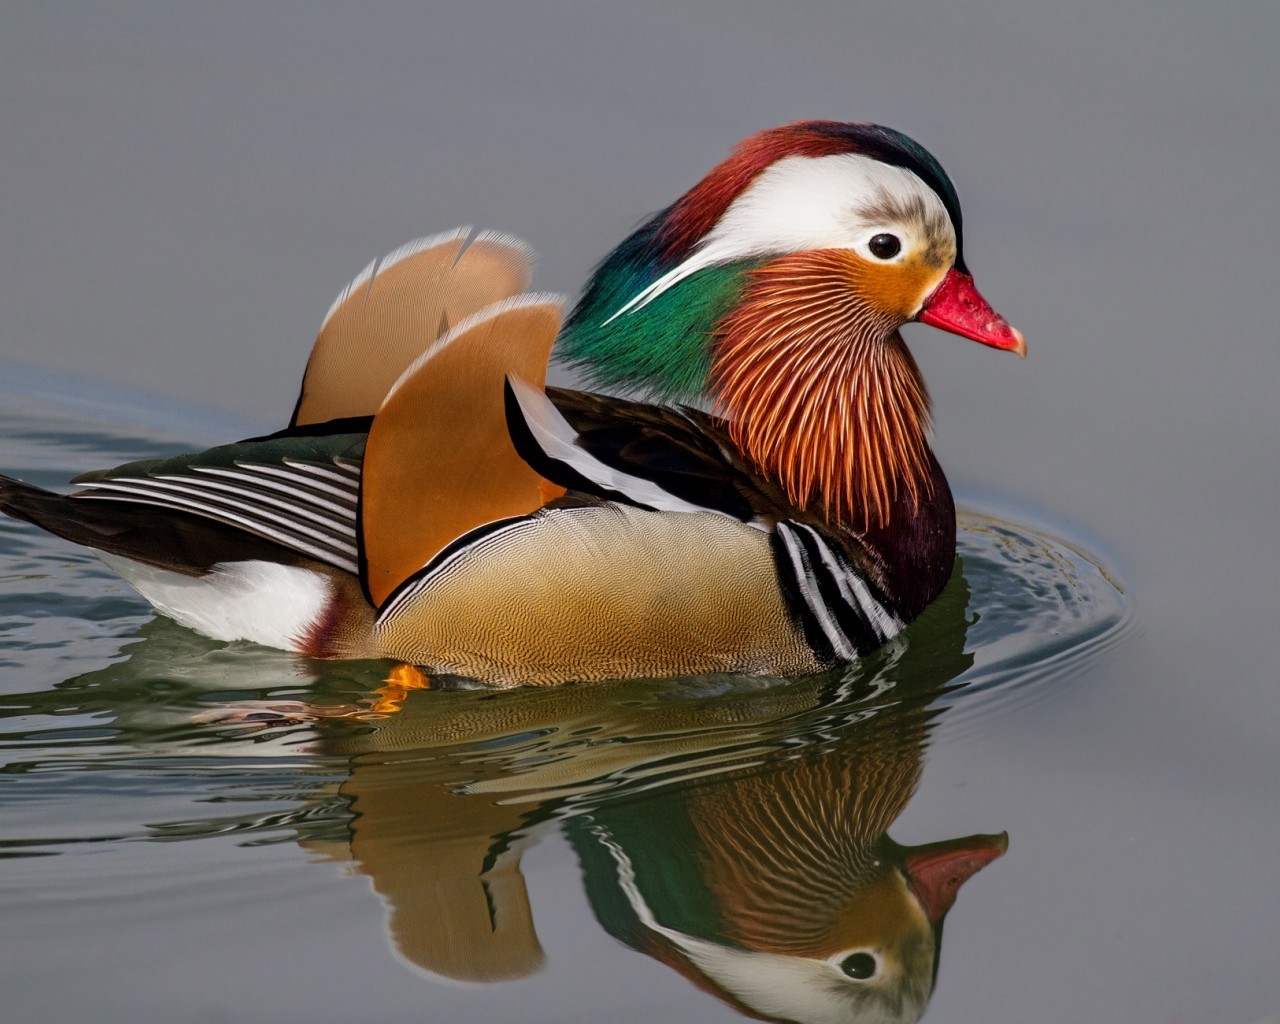 Mandarin Duck for 1280 x 1024 resolution